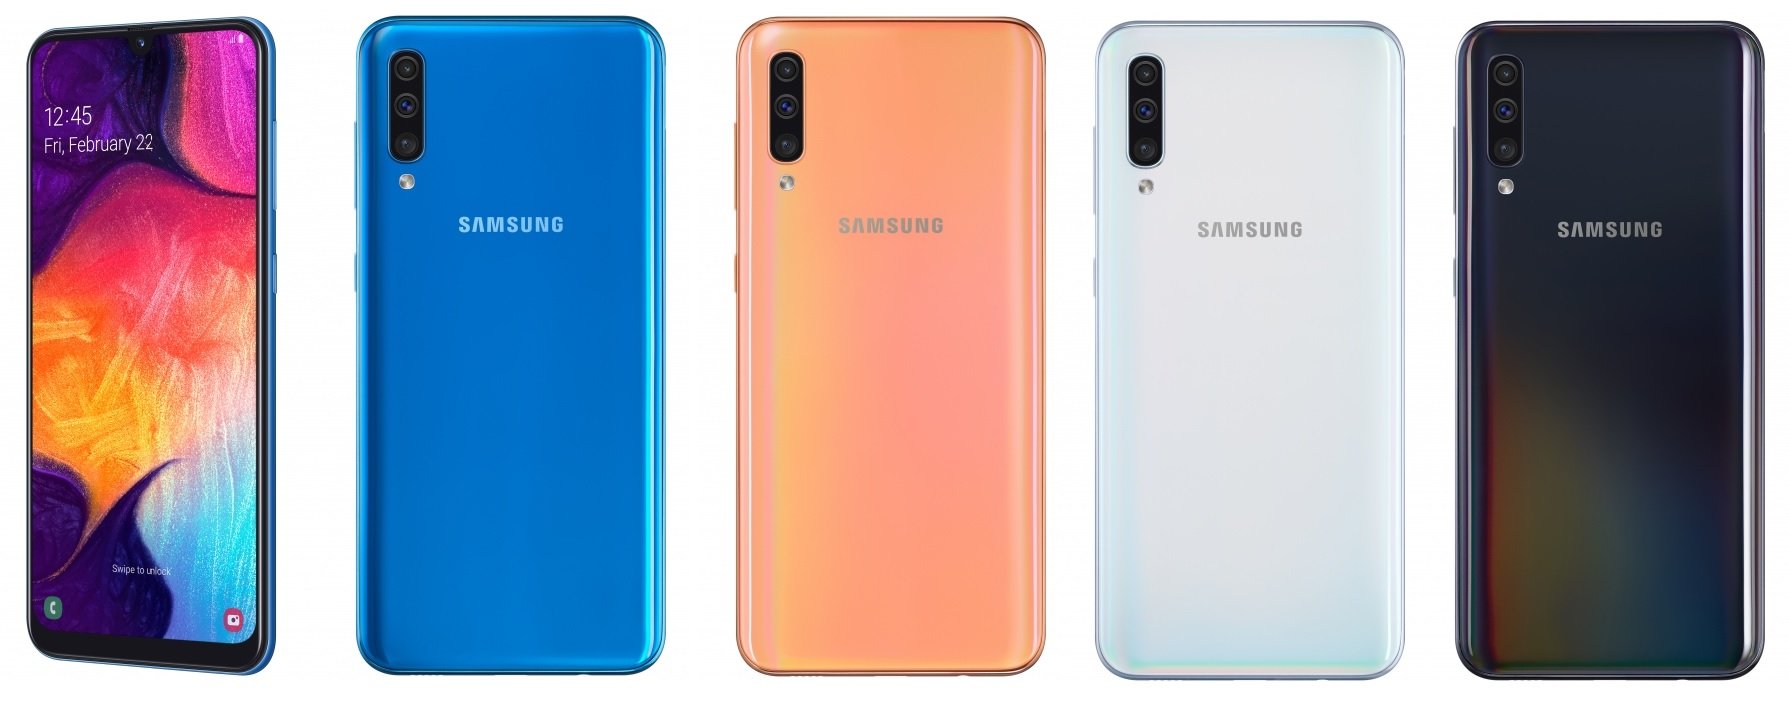 Самсунг а55 отзывы владельцев. Samsung Galaxy a50 128. Самсунг галакси а 50. Samsung Galaxy a50 новый. Samsung Galaxy a50 64.